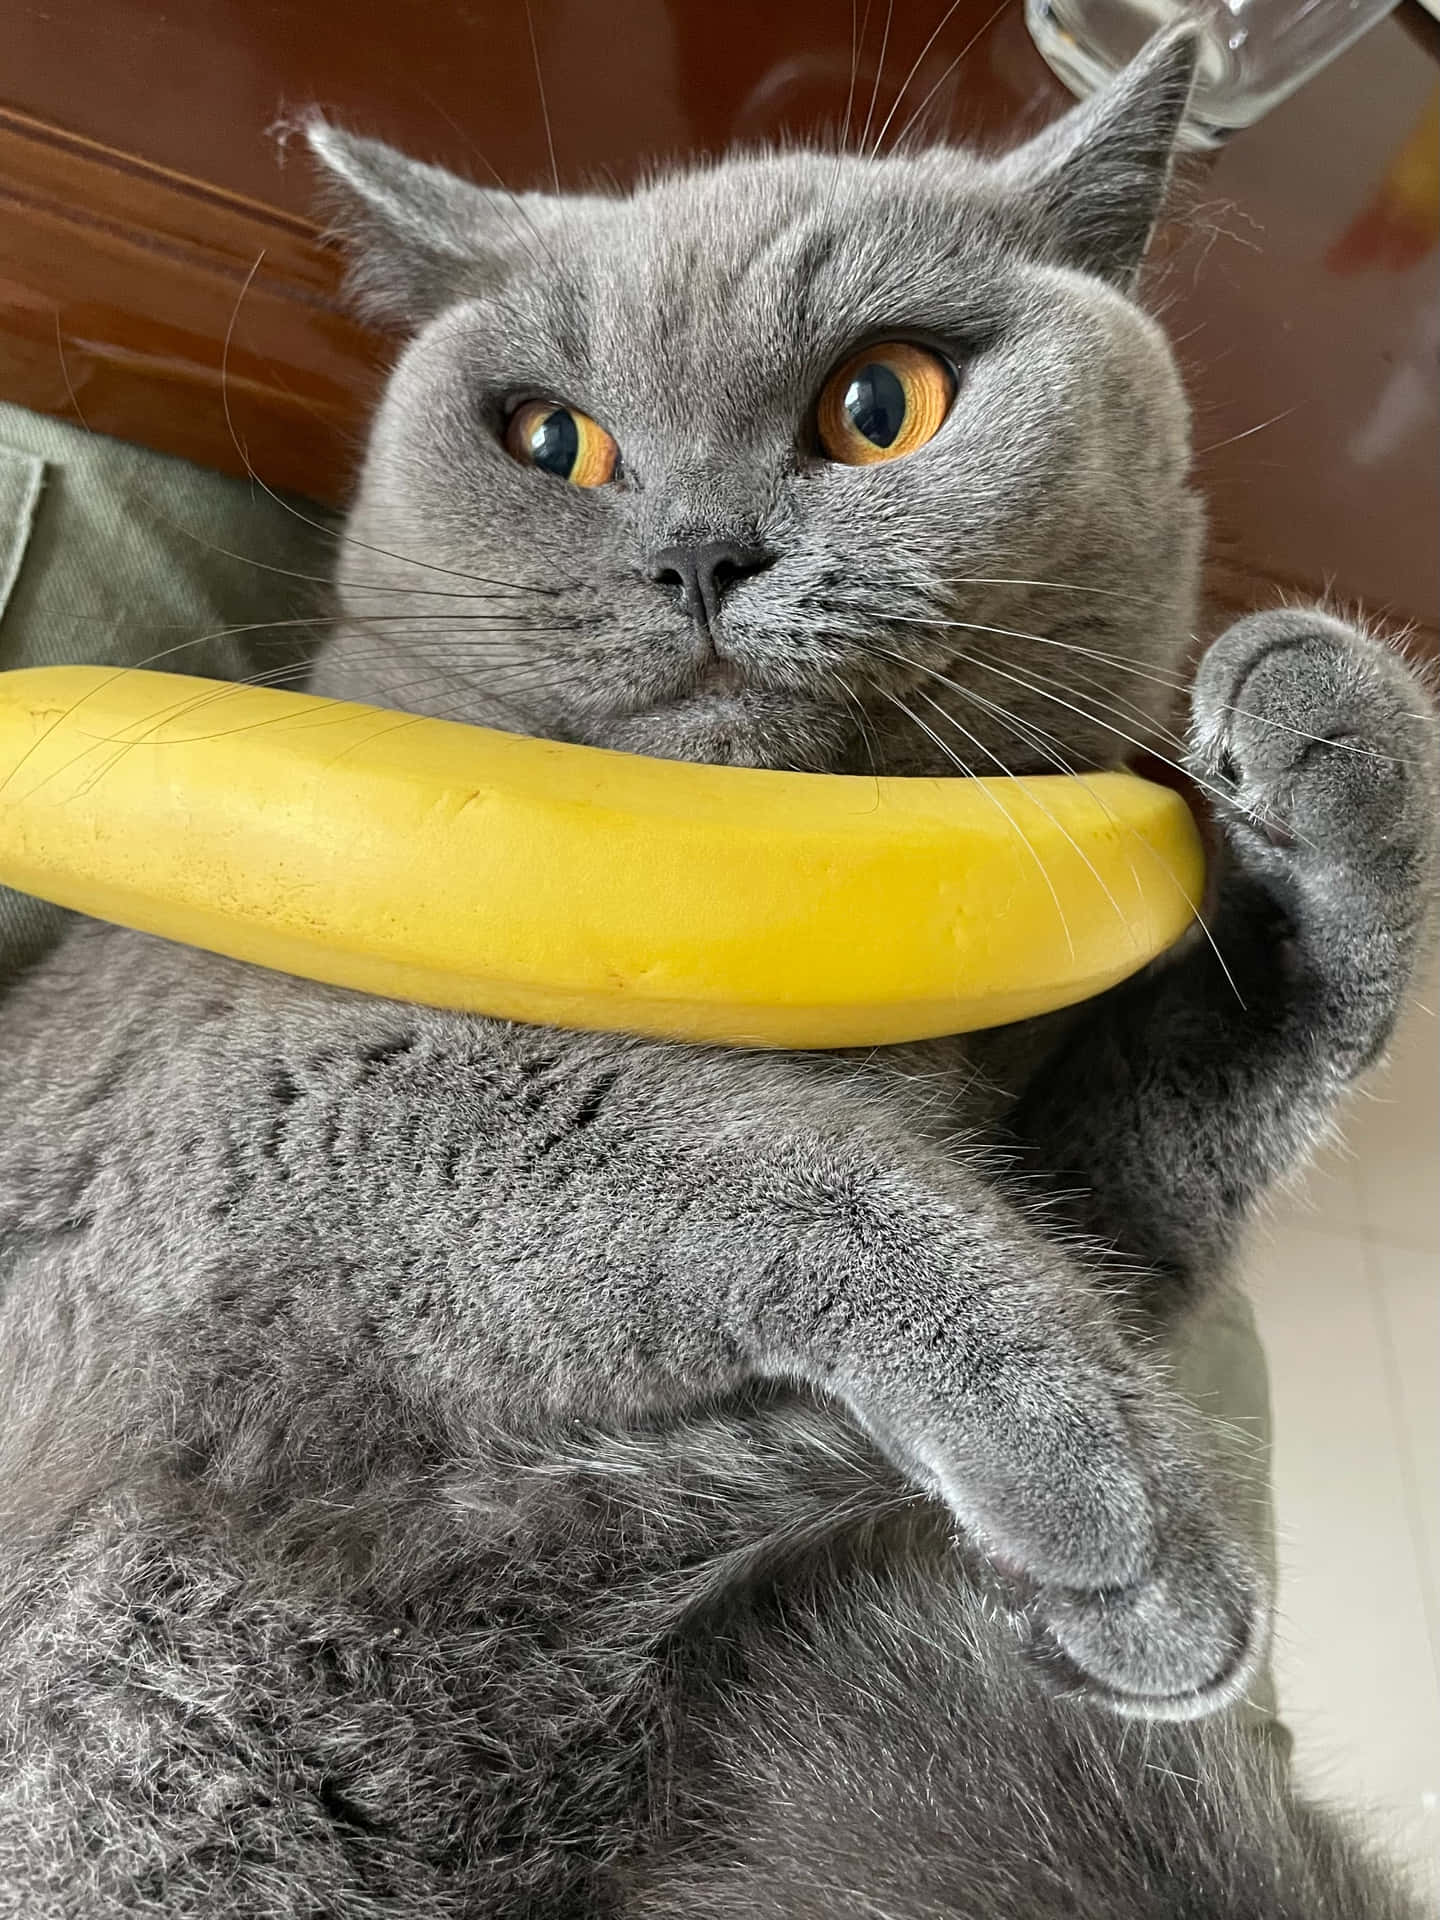 Delicious, nutritious, and delightful - a Banana!